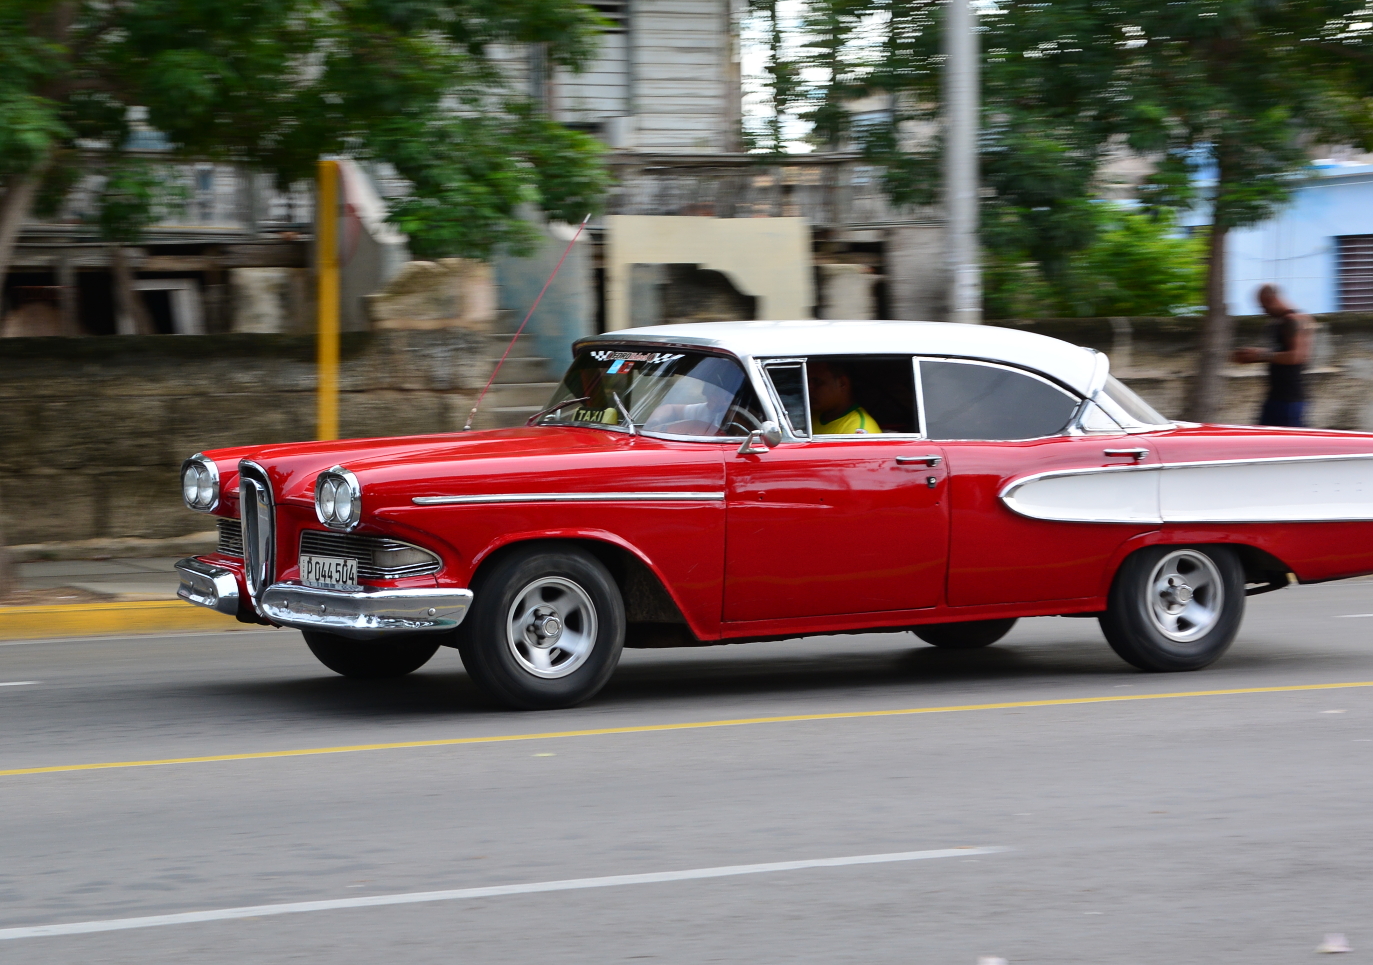 Cuba street